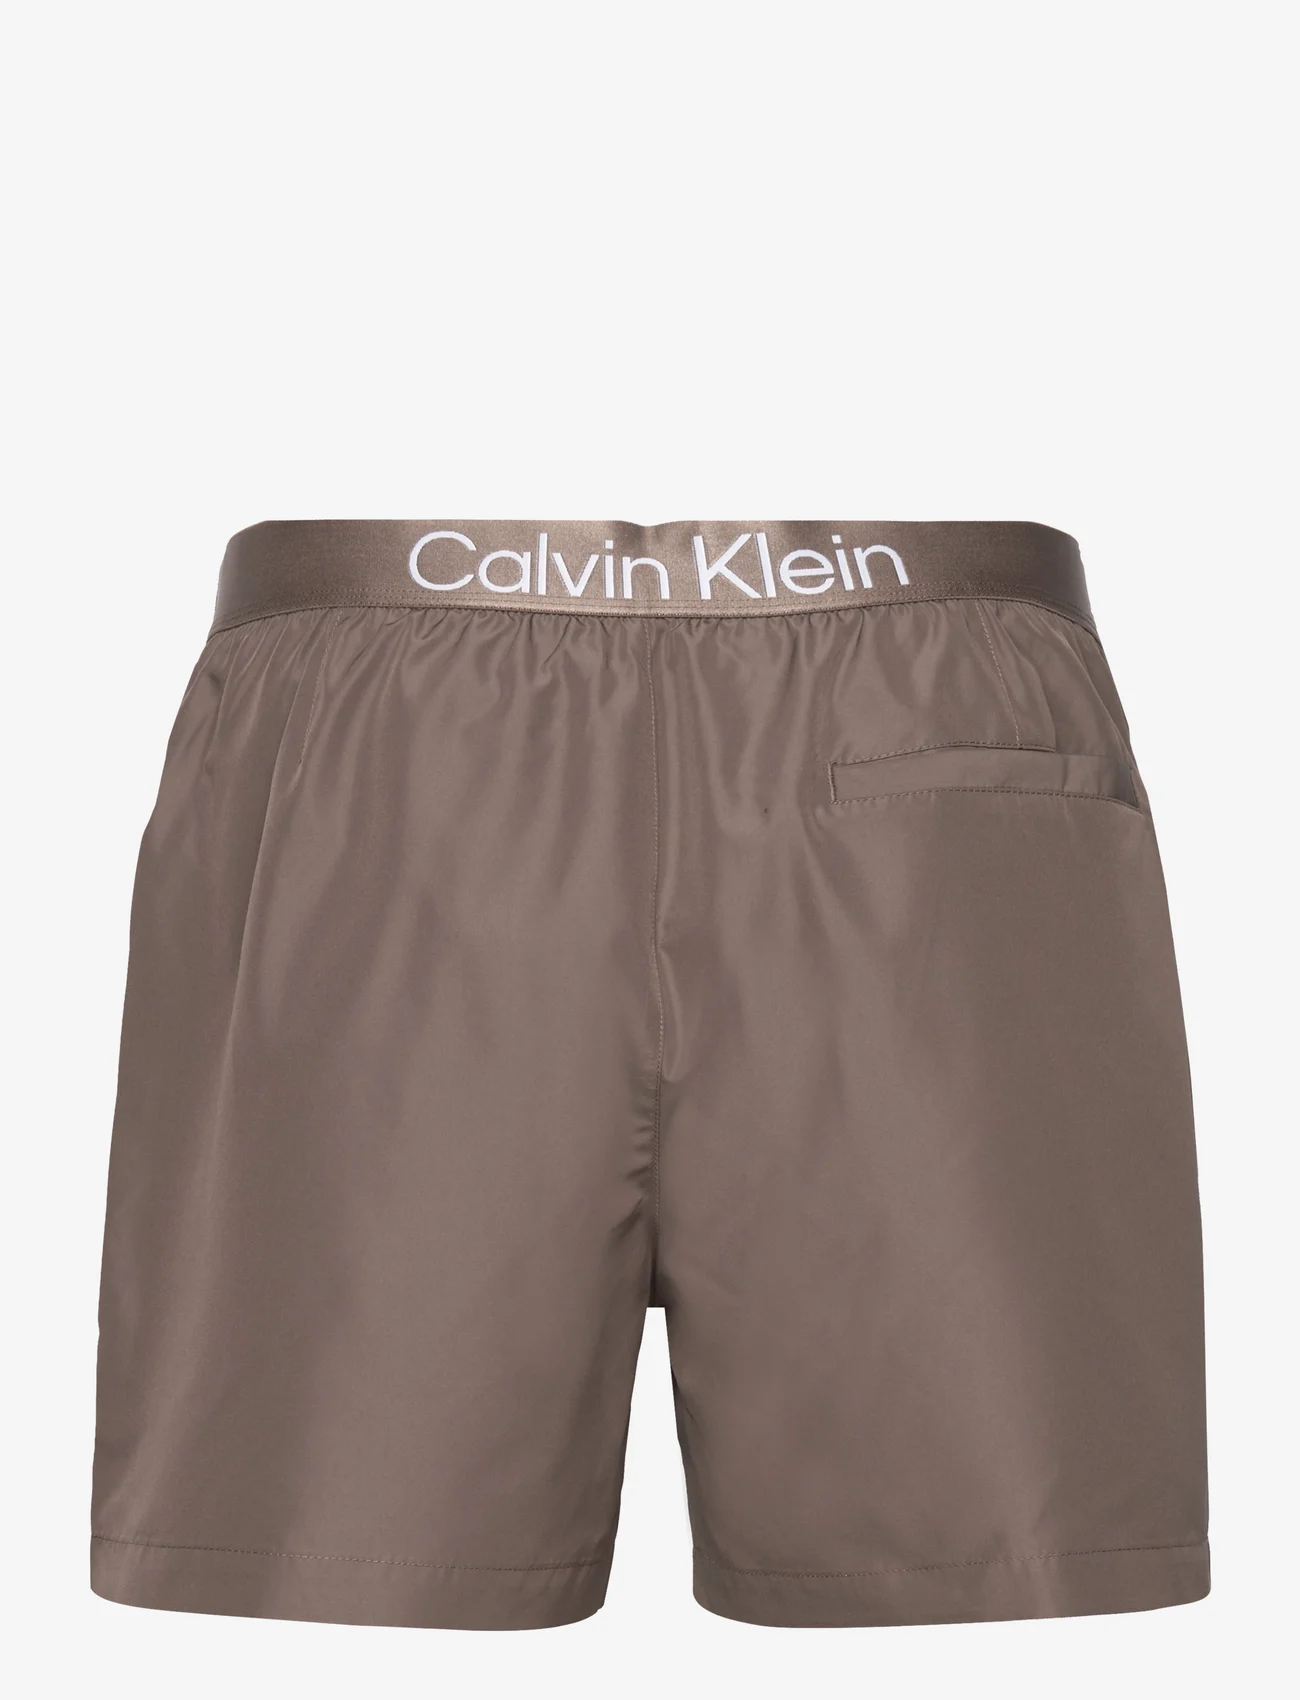 Calvin Klein - MEDIUM DRAWSTRING - szorty kąpielowe - rustic copper - 1